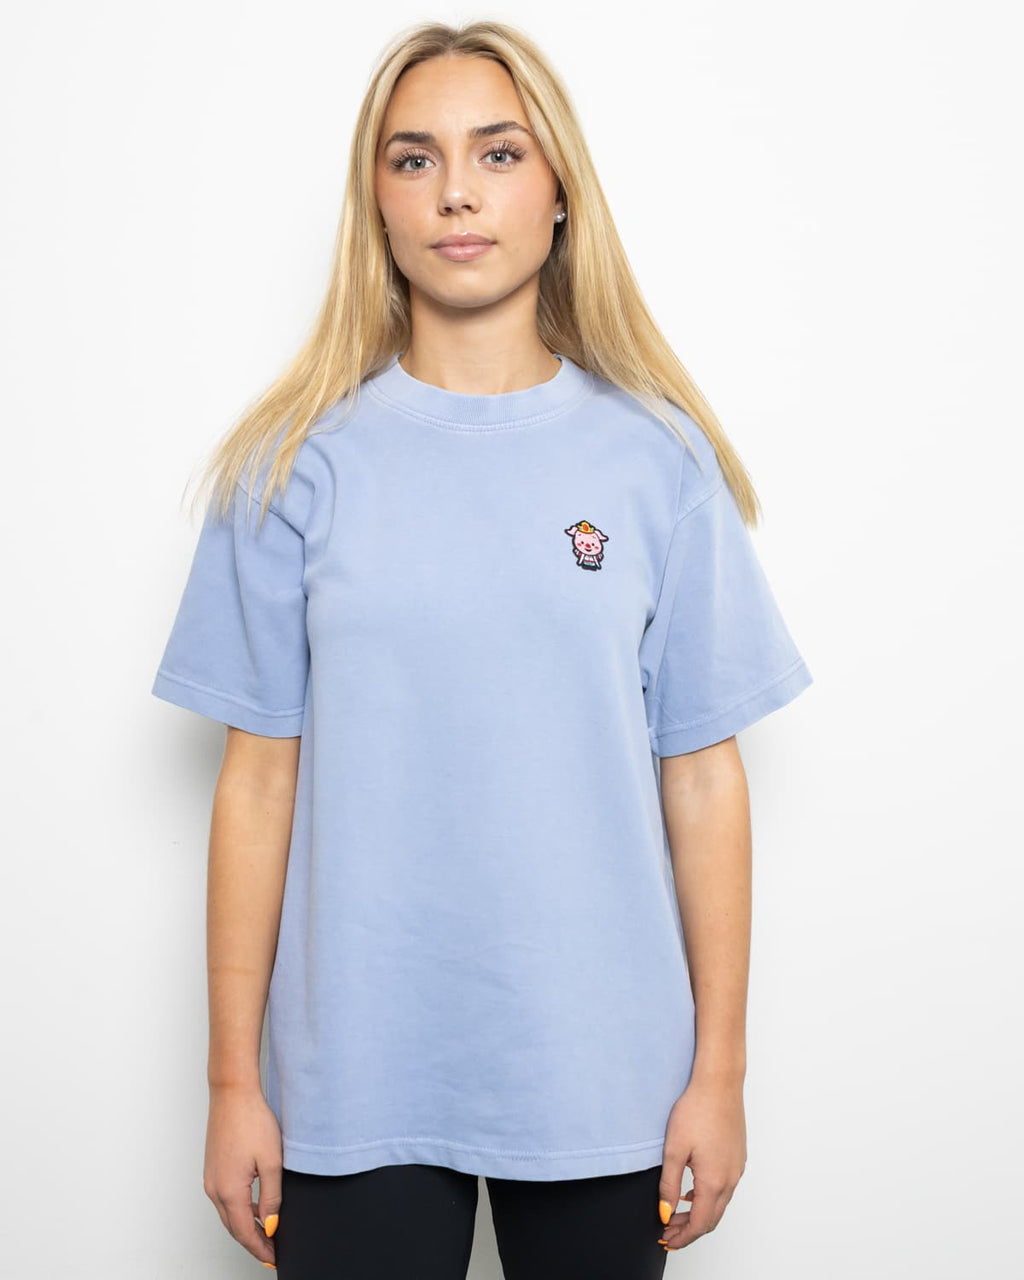 Classic Style TShirt for Girl Technoblade Never Dies r Pig Emperor  5XL Creative Gift Idea T Shirt Stuff Ofertas - AliExpress